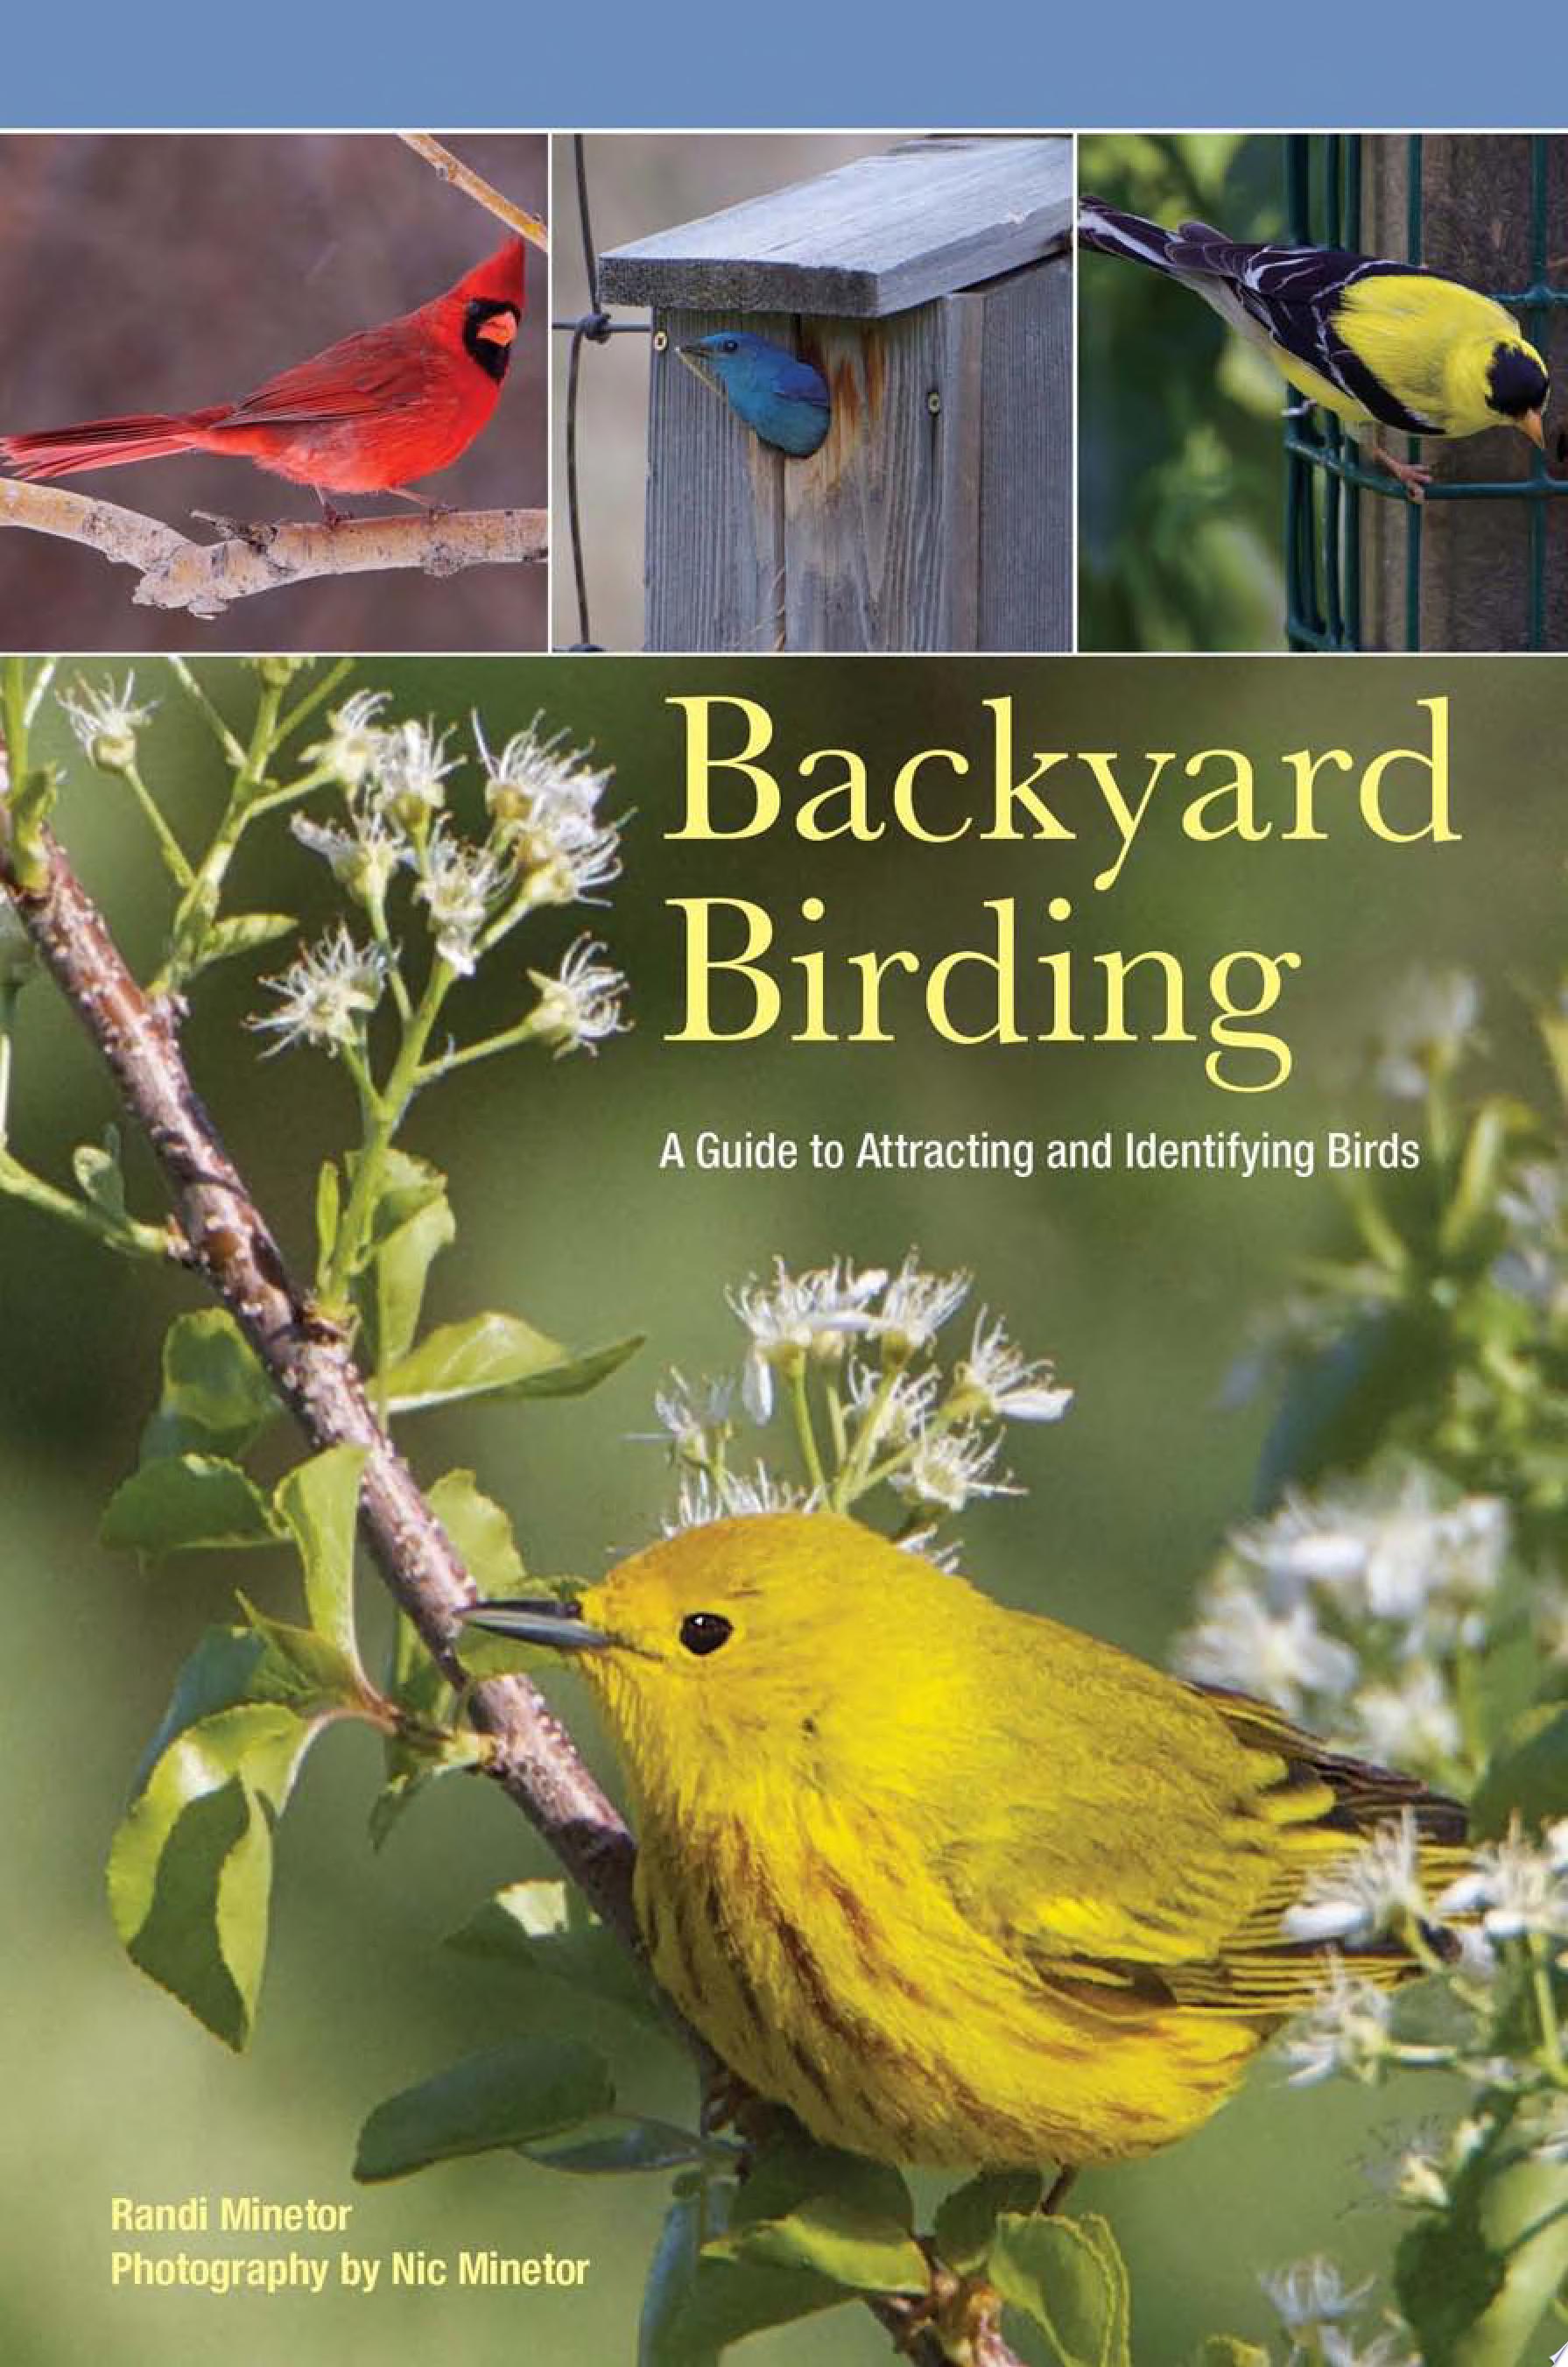 Image for "Backyard Birding"